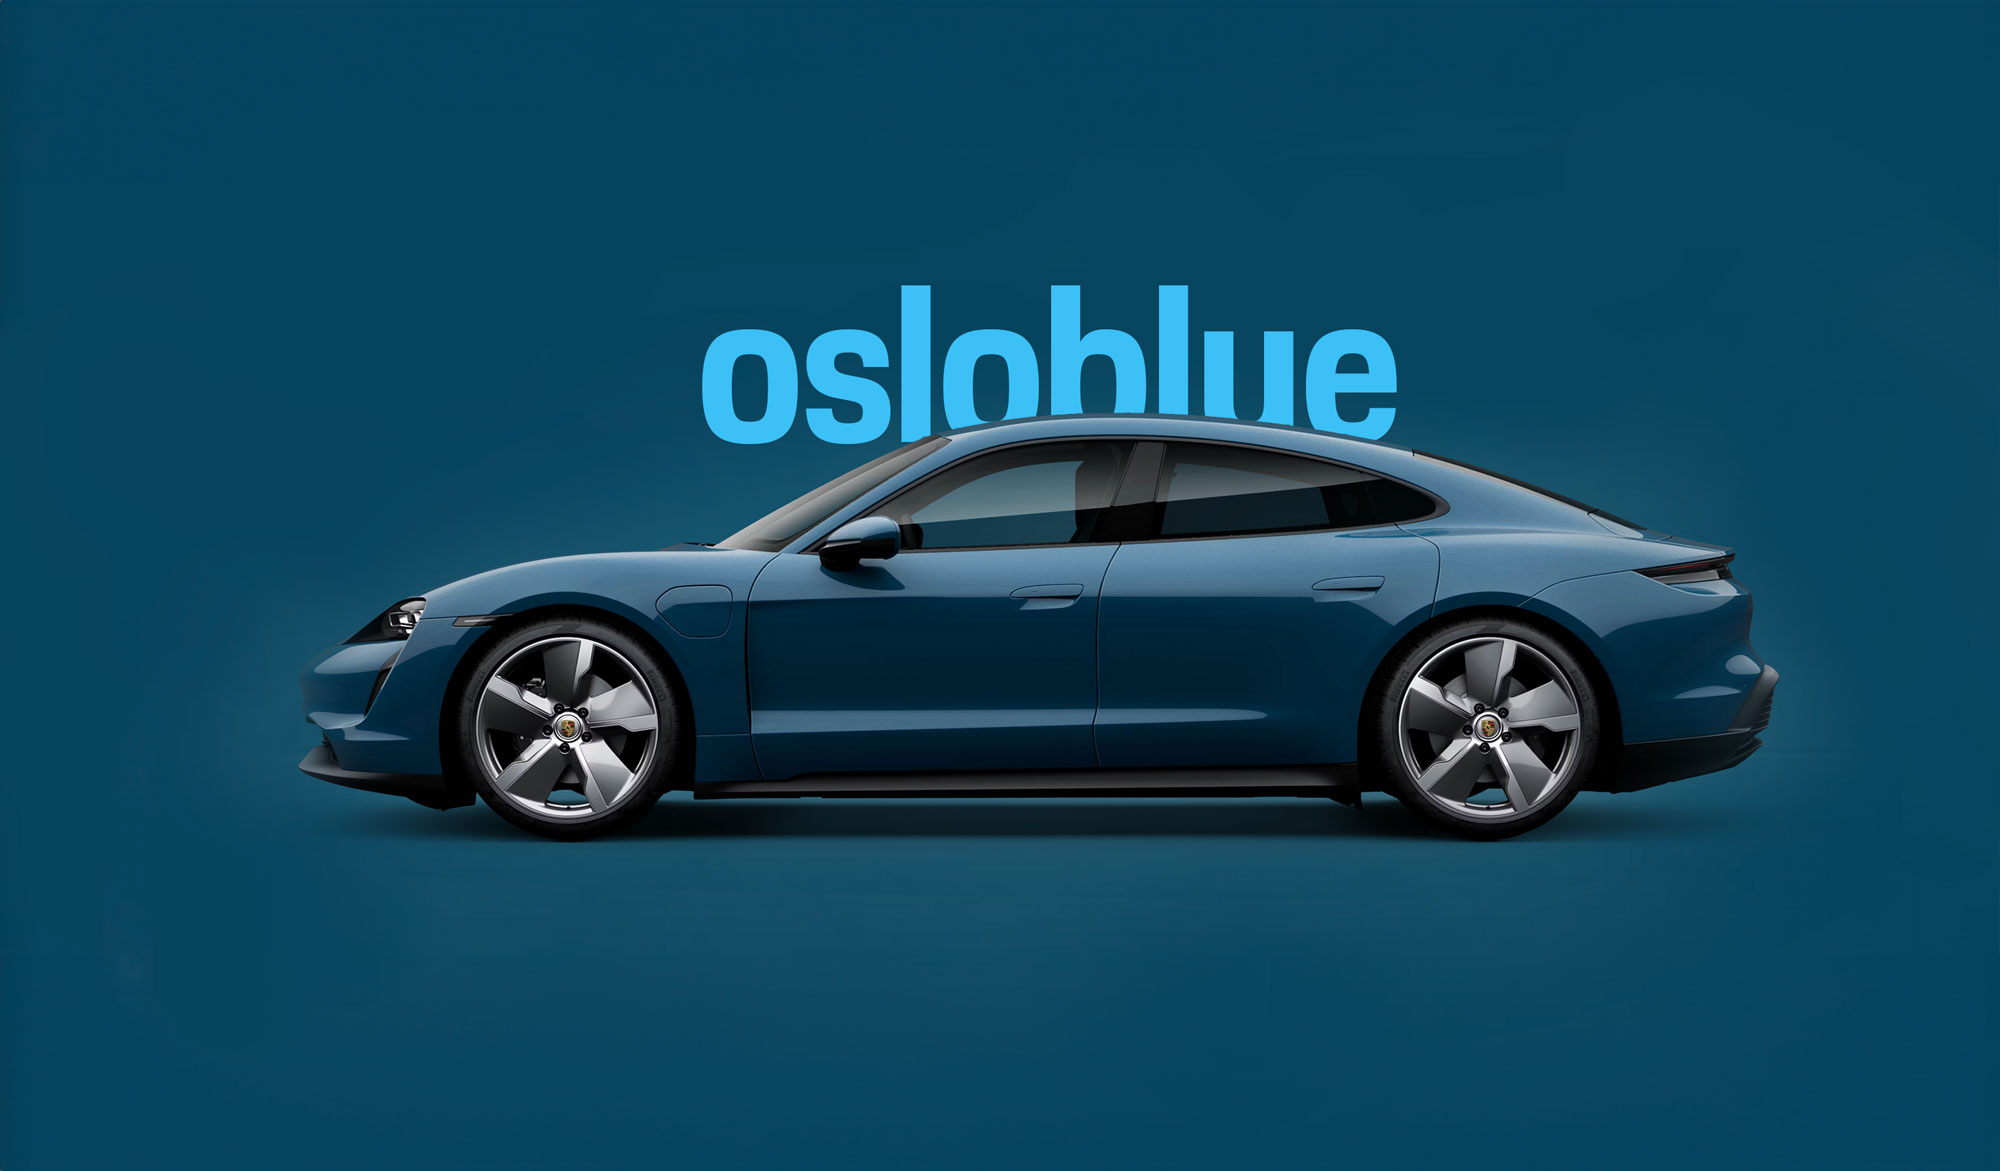 Porsche 911 in the Paint To Sample Plus Oslo Blue colour